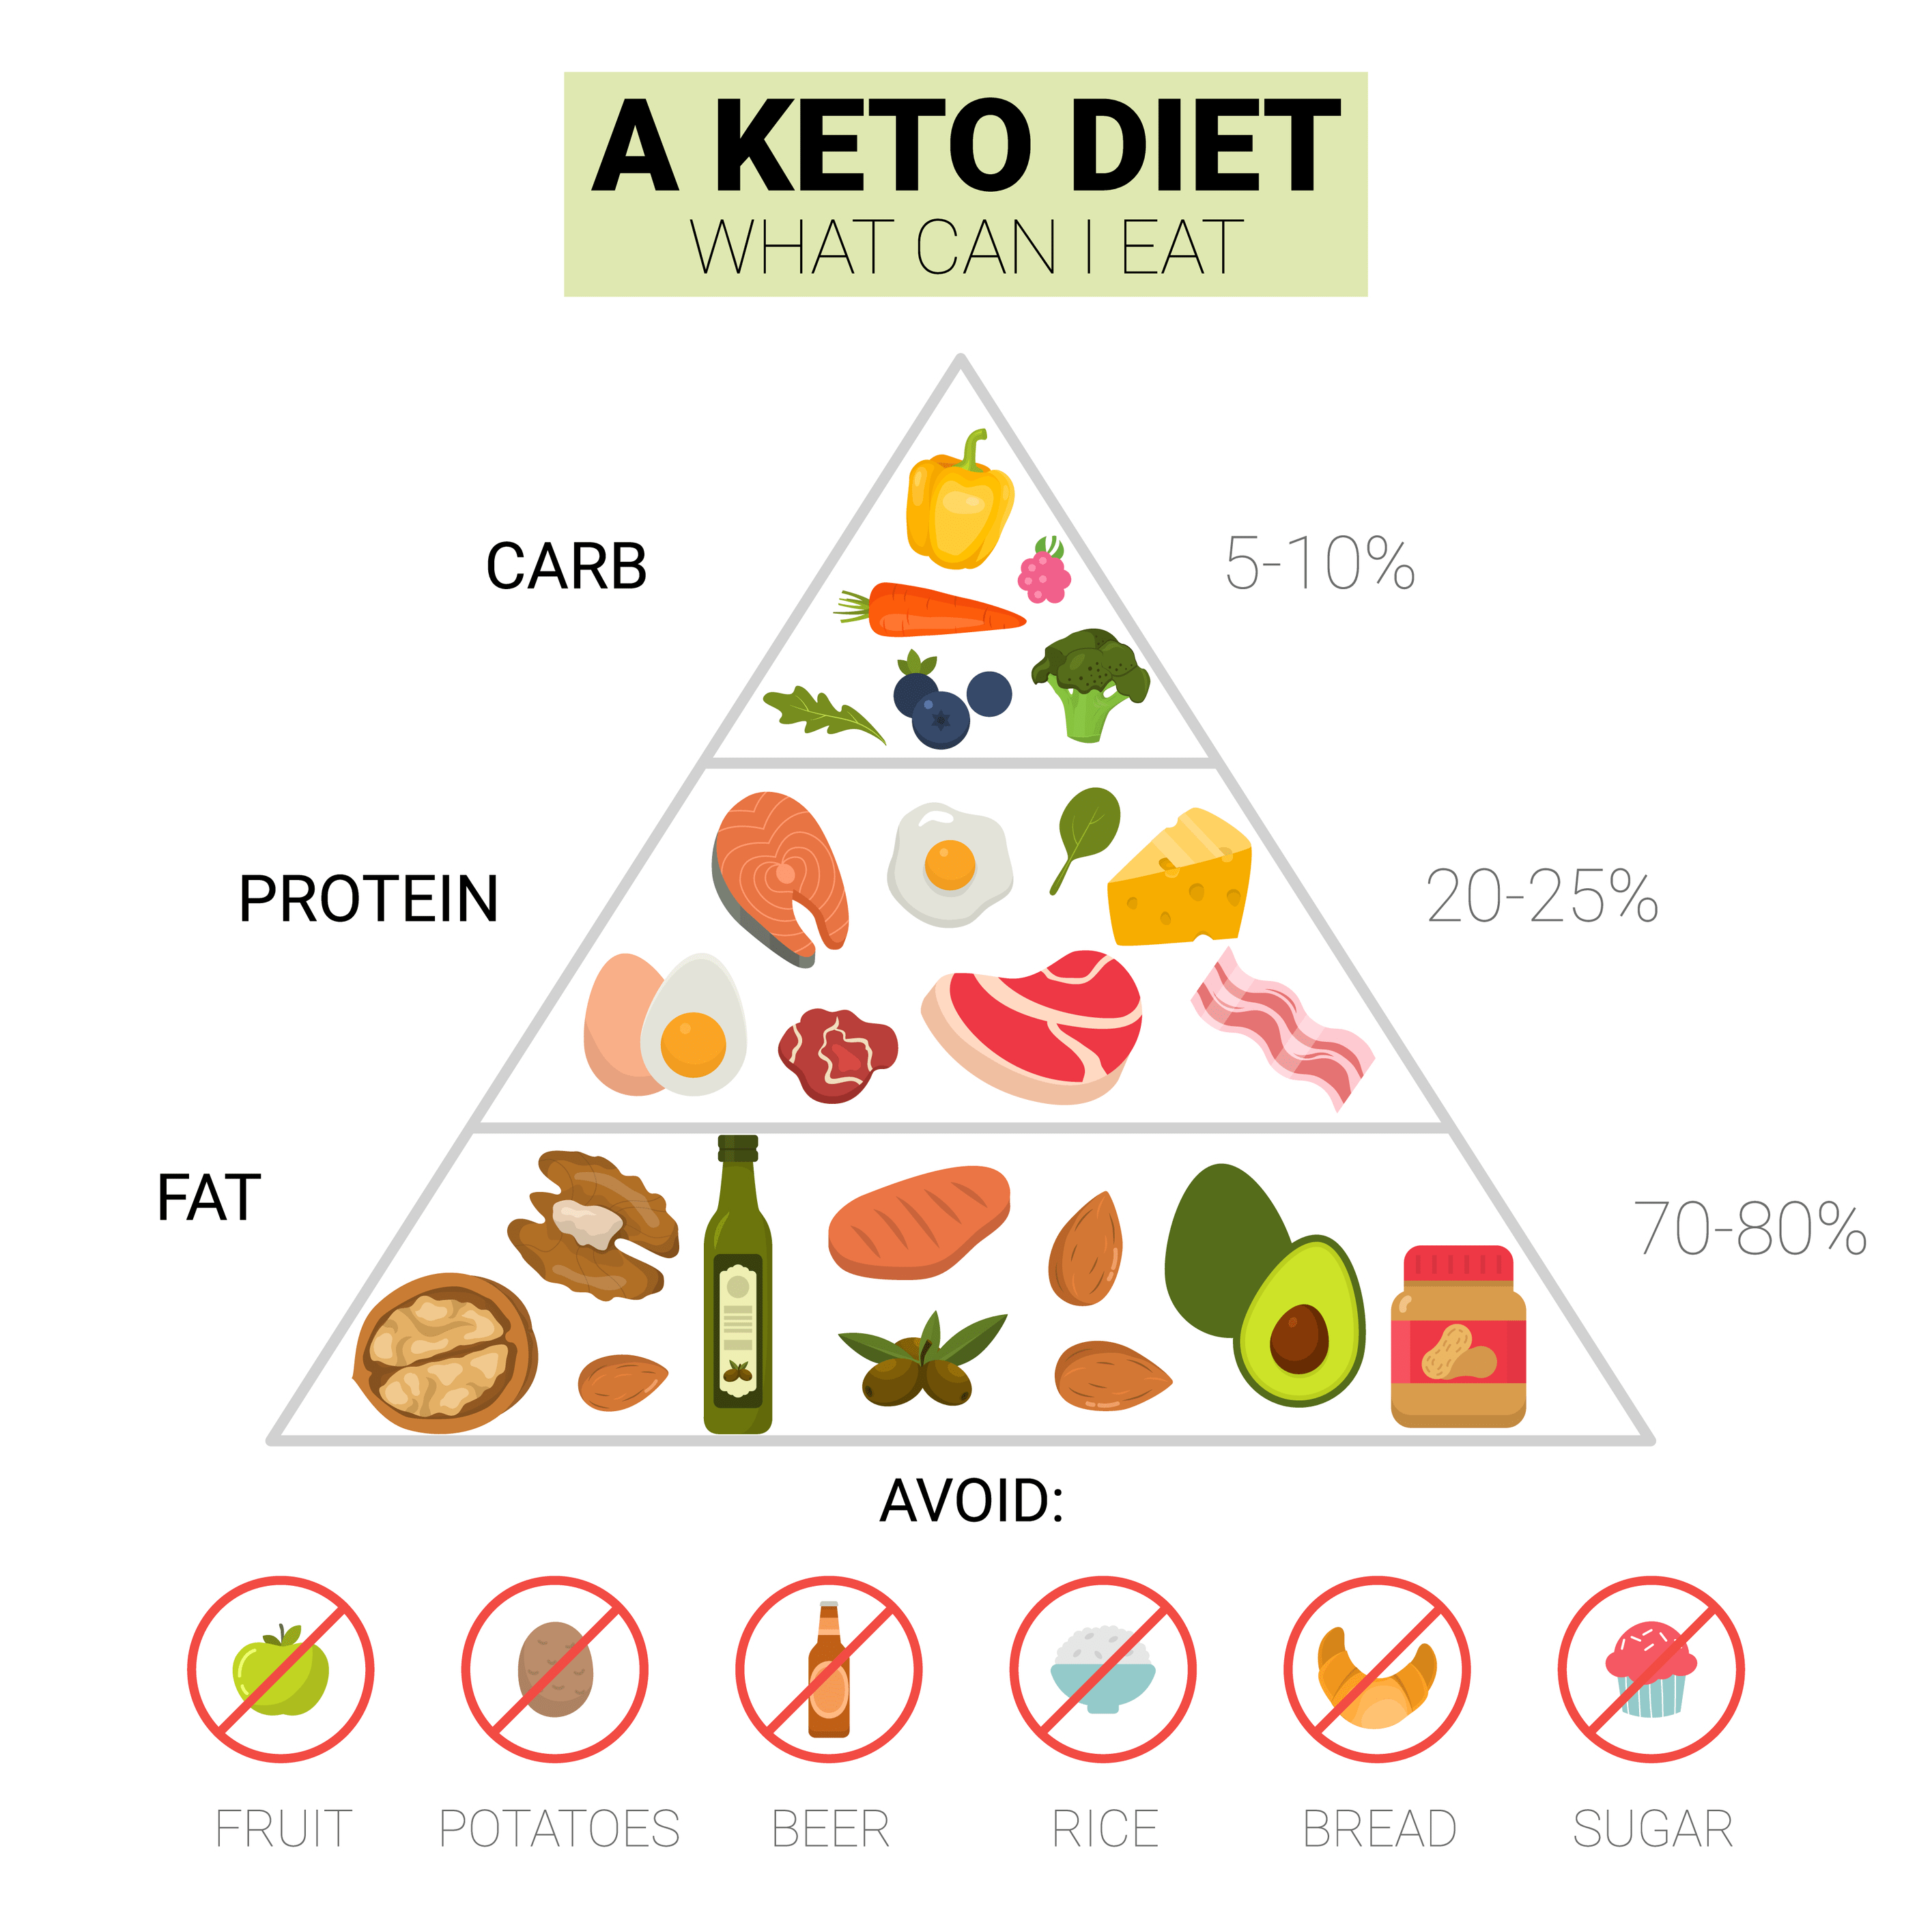 How To Make A Keto Meal Plan Keto Tips And Tricks